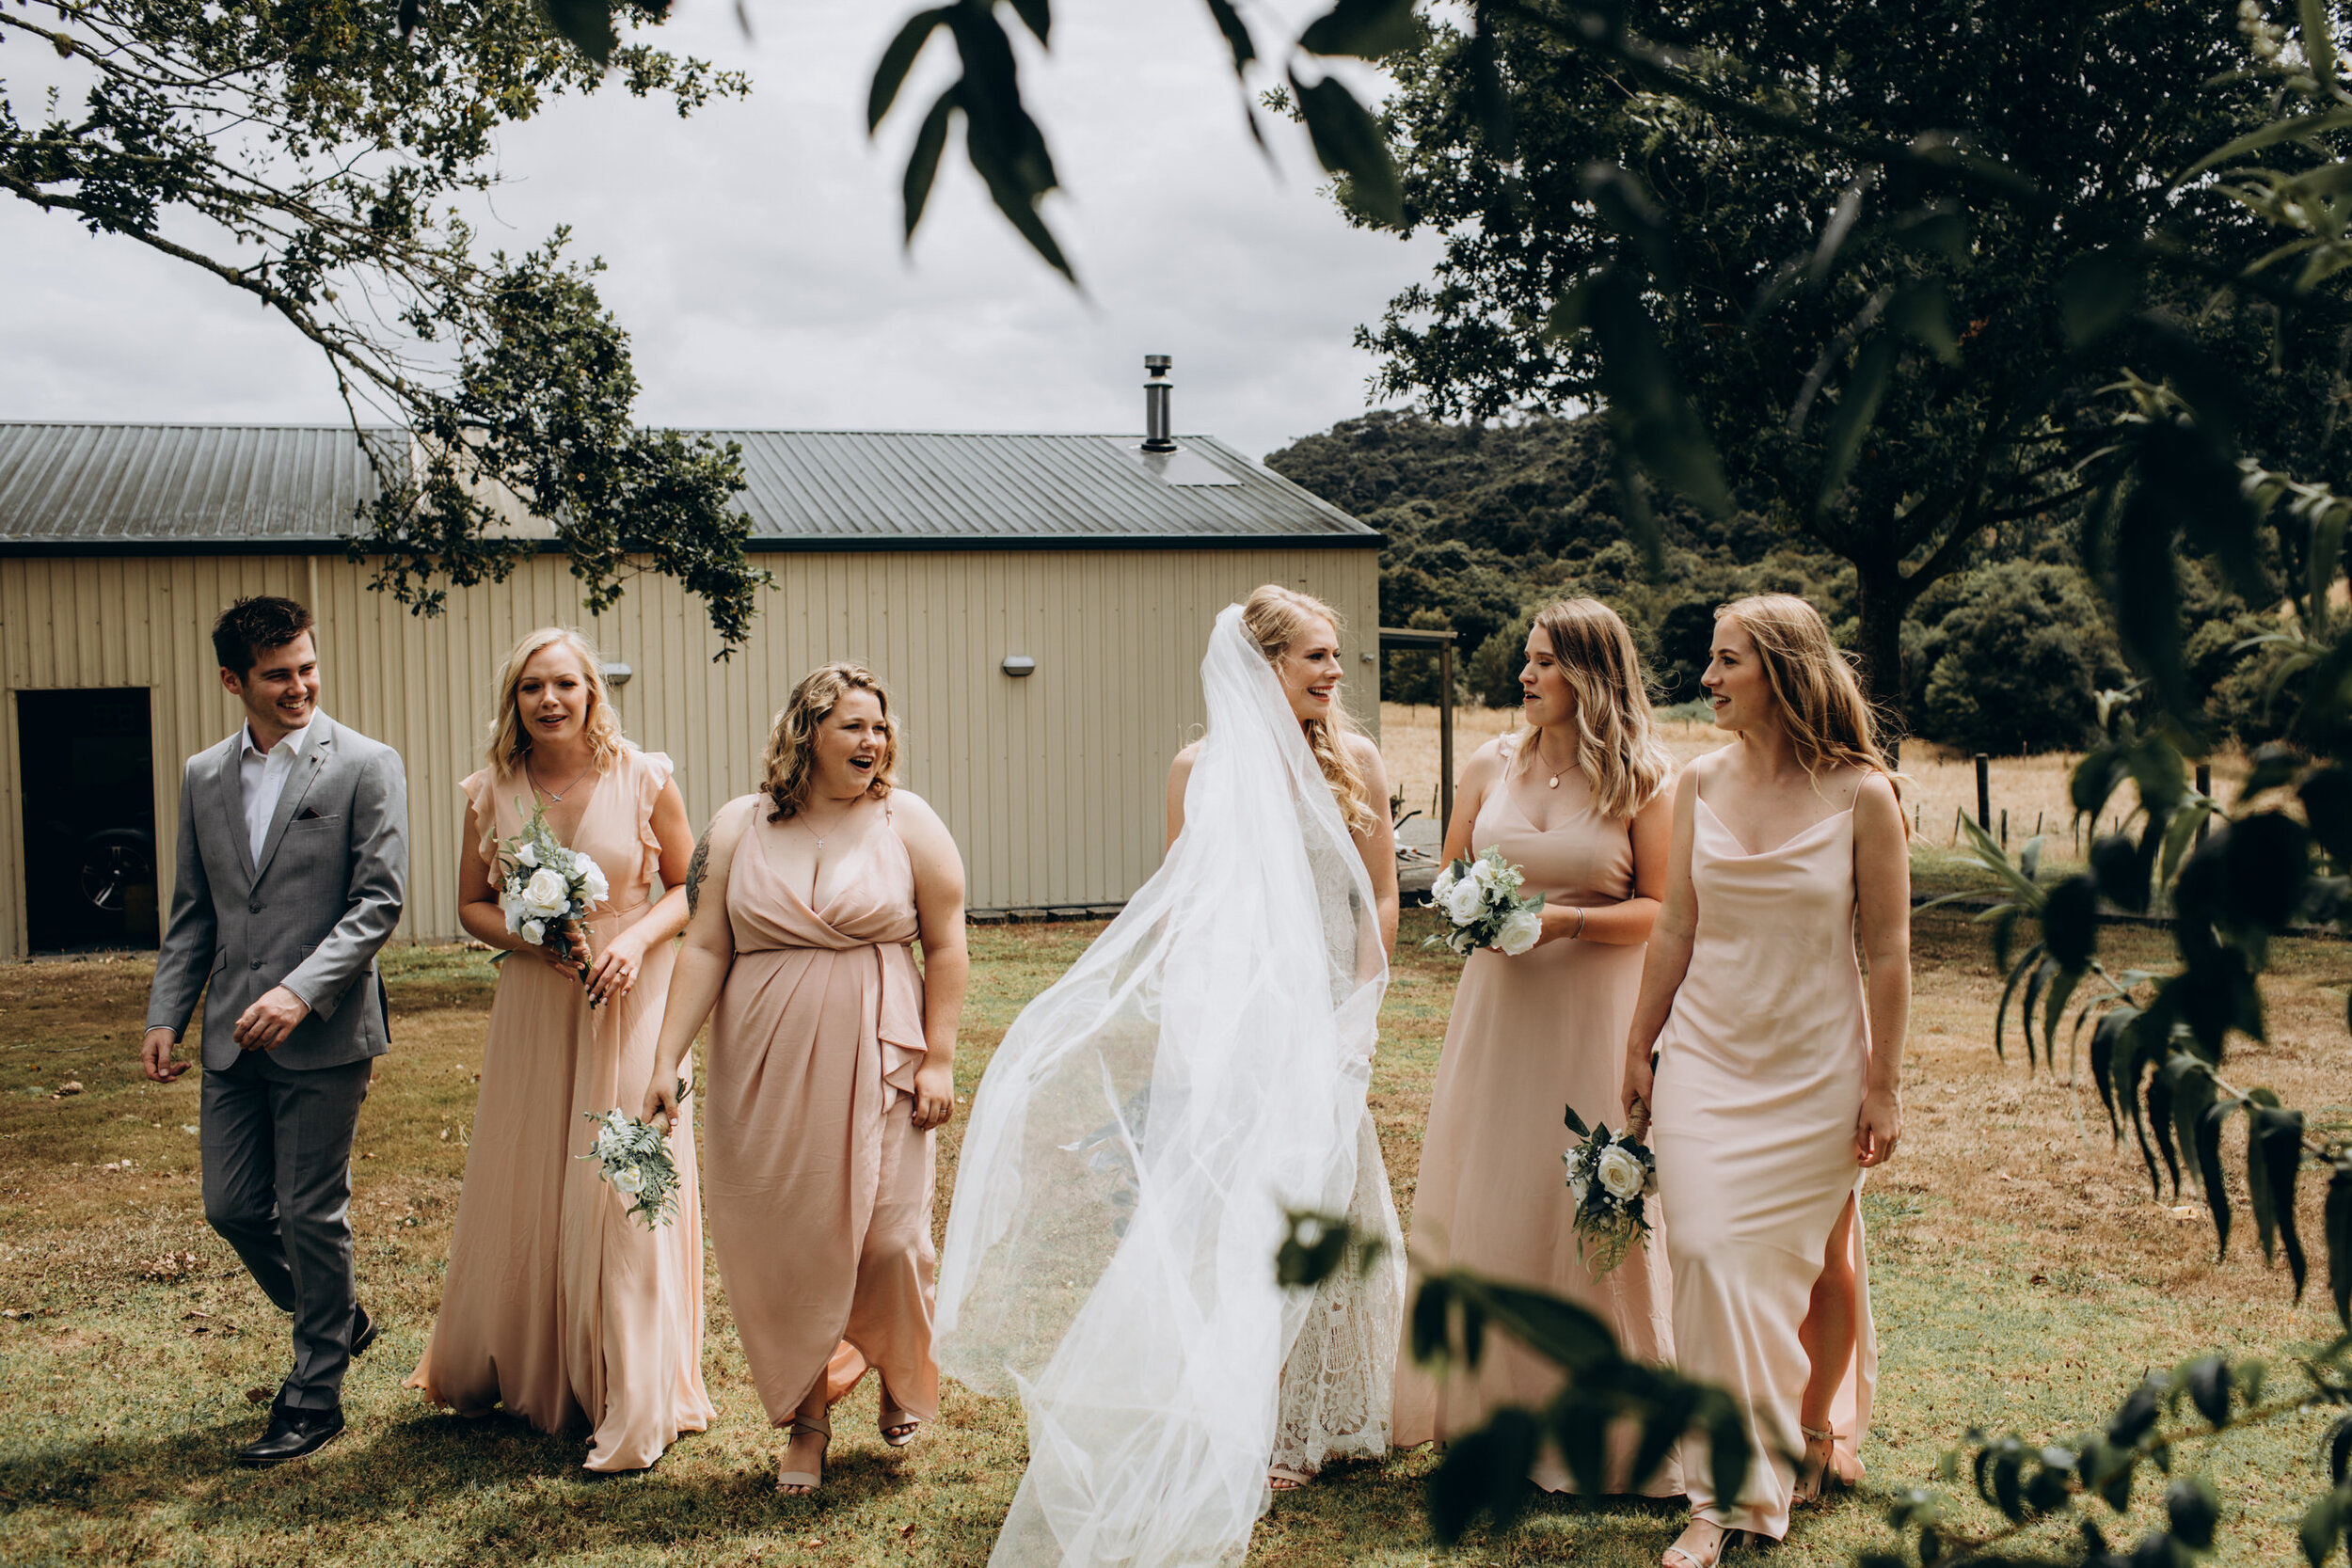 The barn wedding venue waimauku | the barn waimauky diy rustic wedding venue | Kumeu wedding venues | Auckland wedding photographer | New Zealand wedding packages